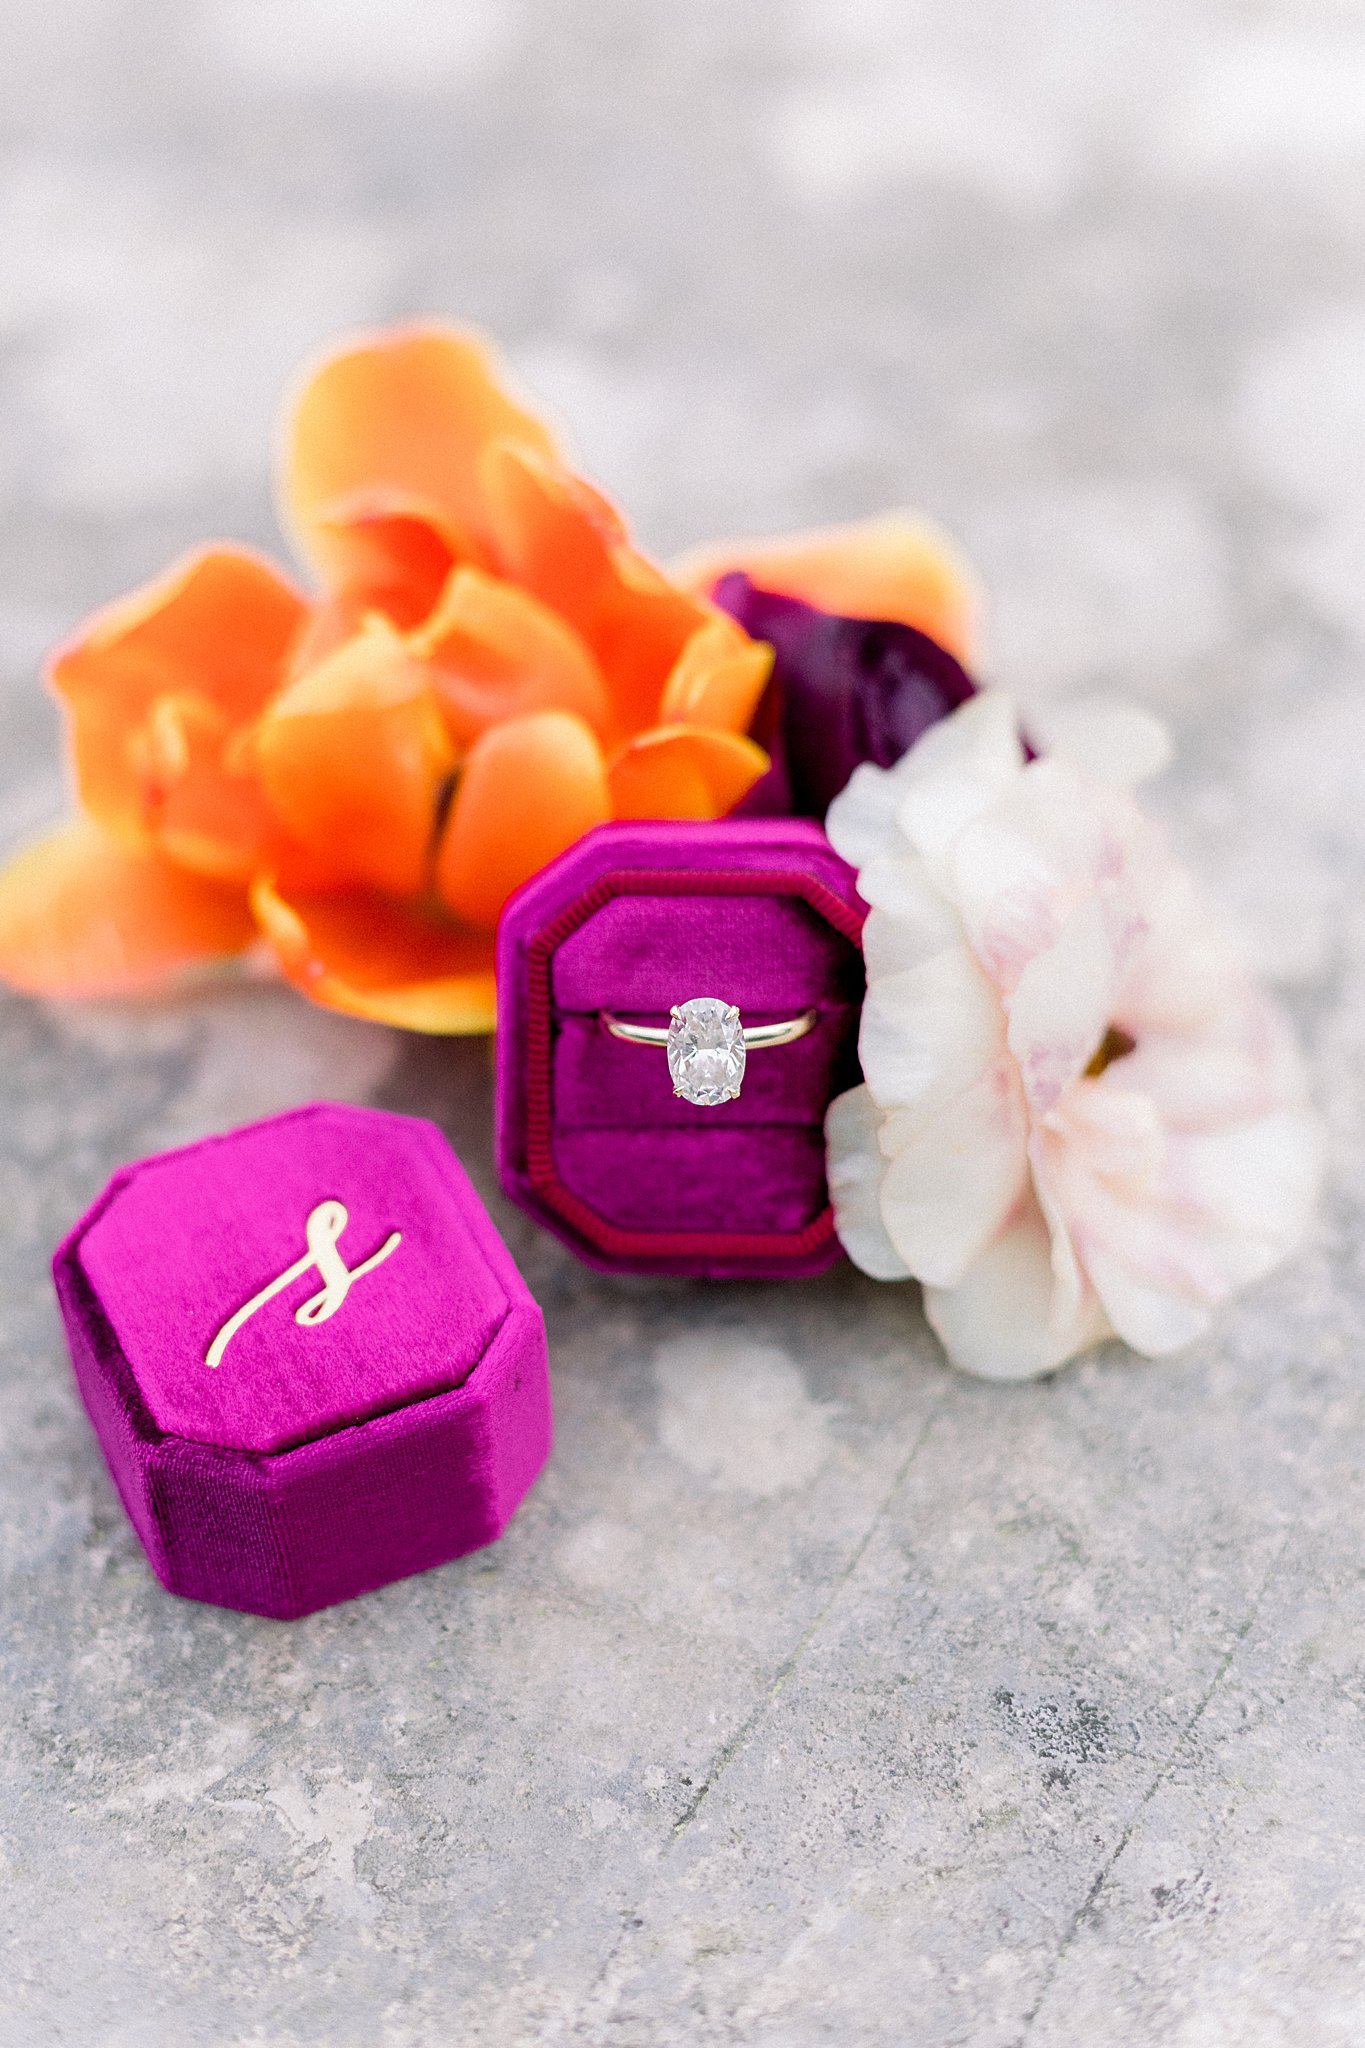 Engagement Ring in Velvet Ring Box, Anna Kay Photography, Texas Wedding Photographer